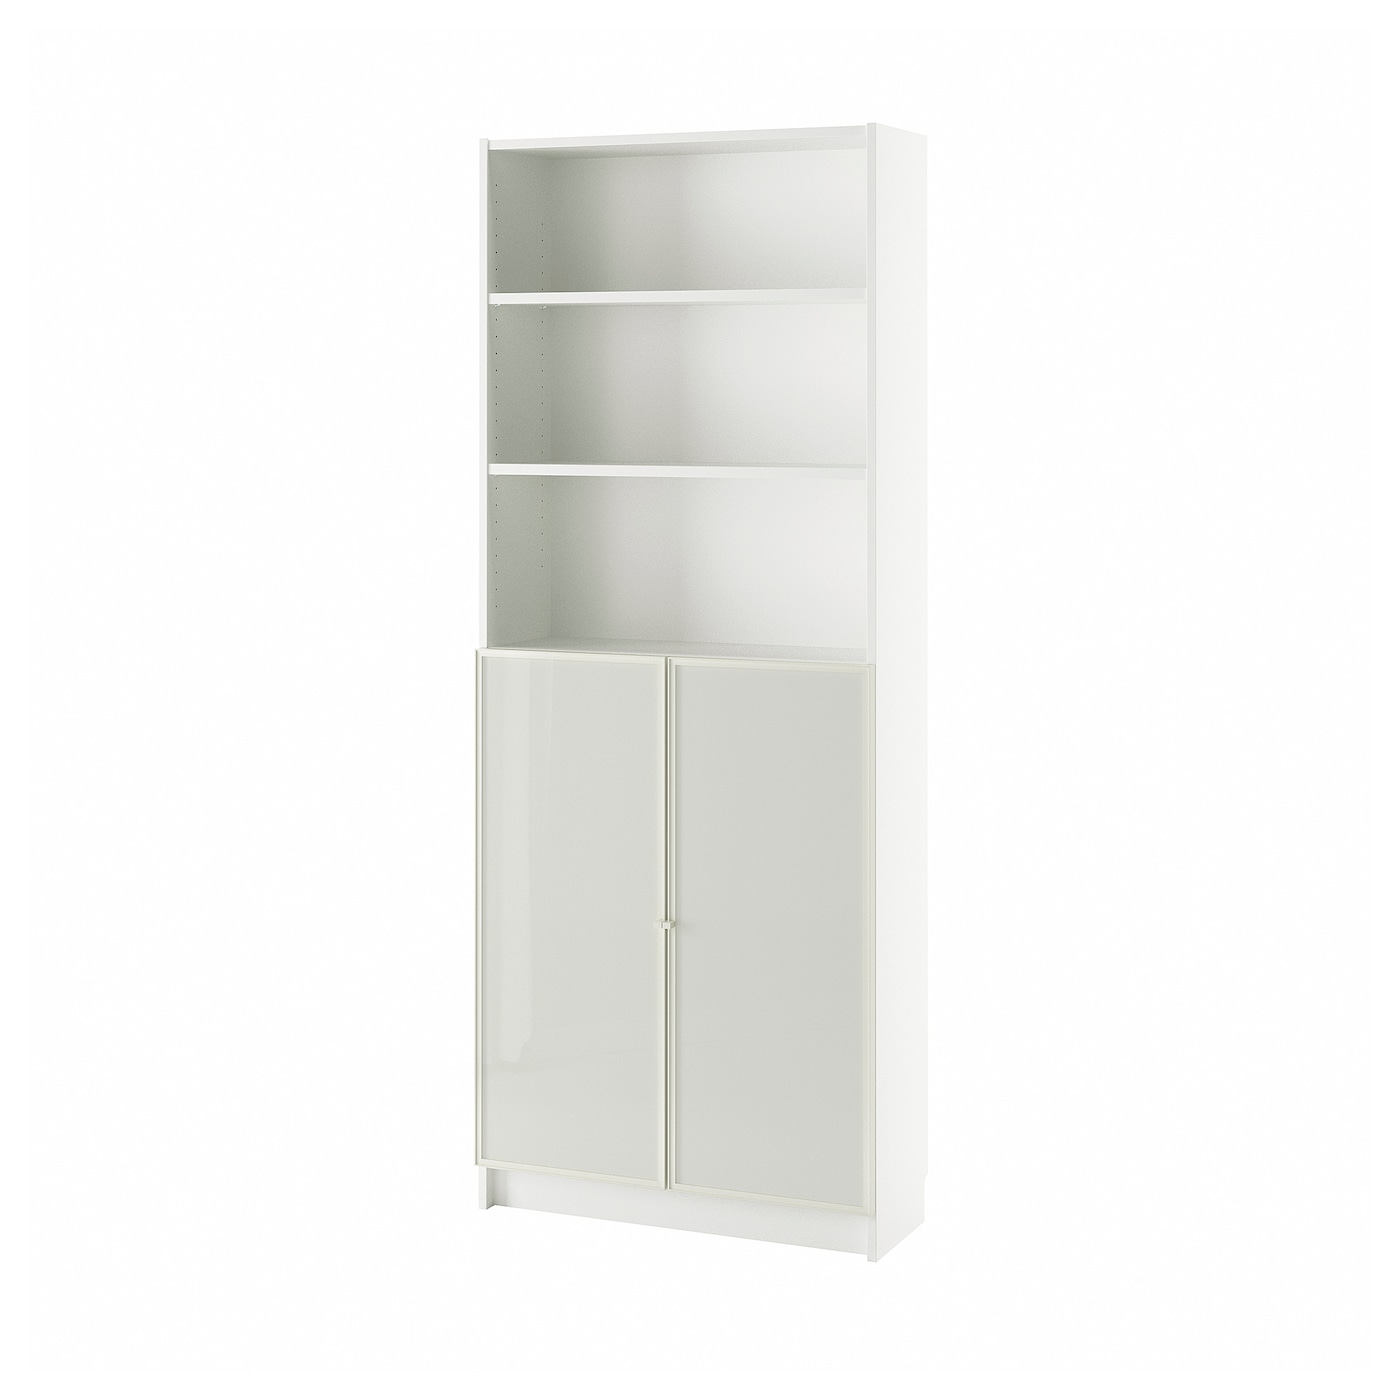 Книжный шкаф со стеклянной дверью - BILLY/HÖGBO IKEA/ БИЛЛИ/ХОГБО ИКЕА, 30х80х202 см, белый